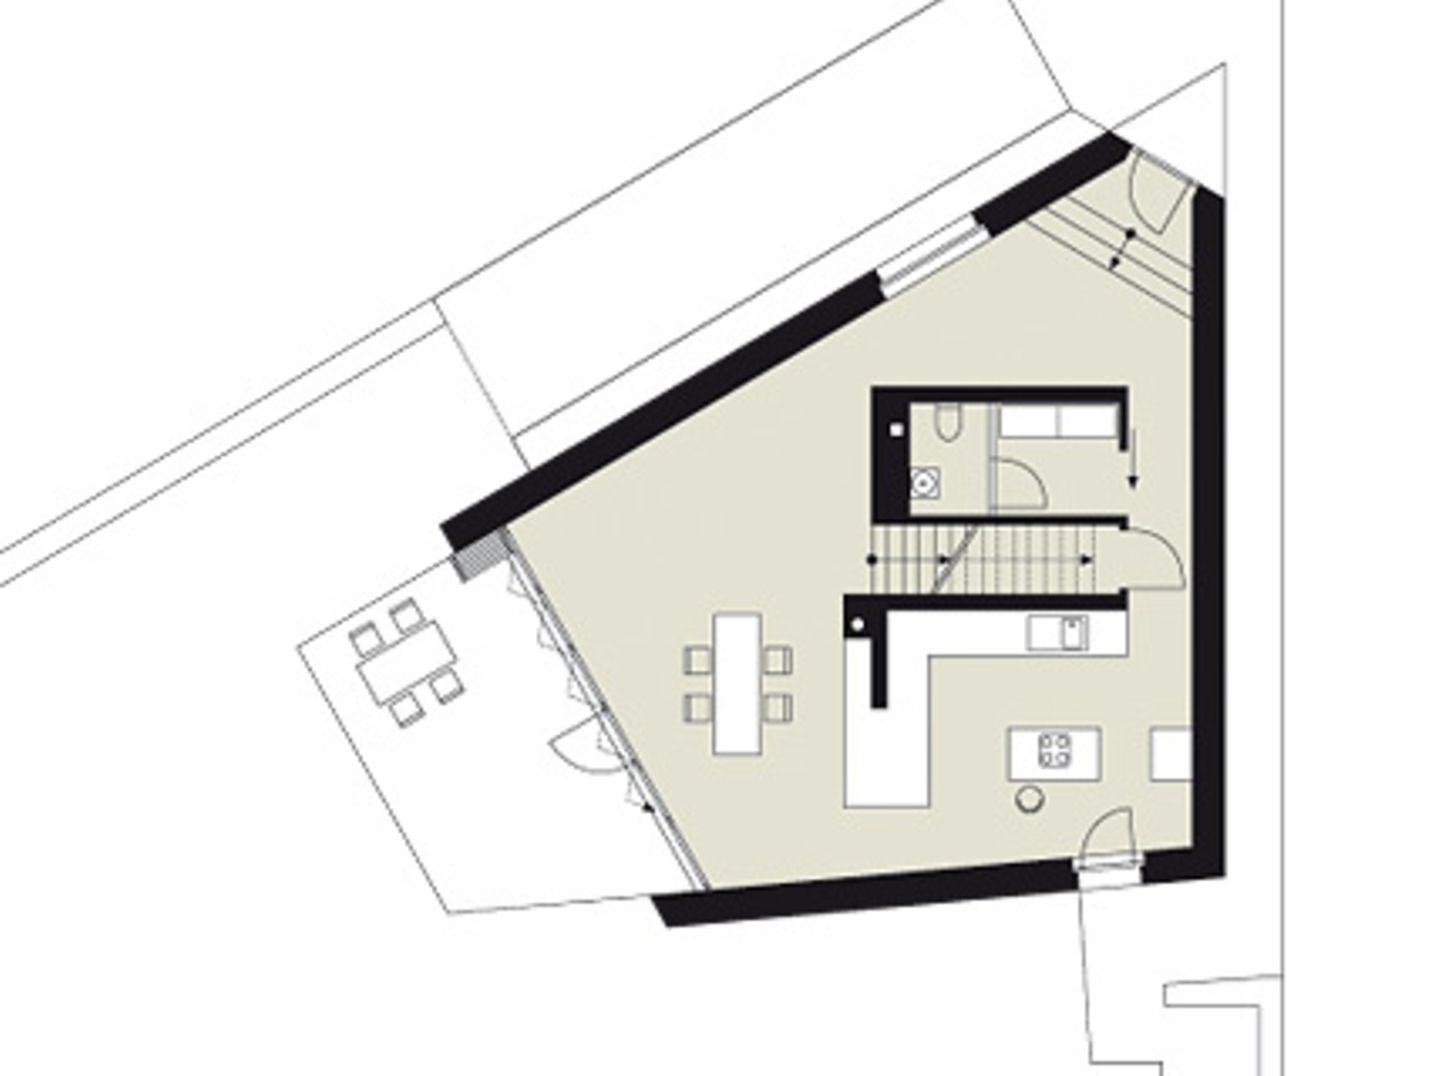 Planmaterial: Trapezförmiges Haus platzsparend gebaut